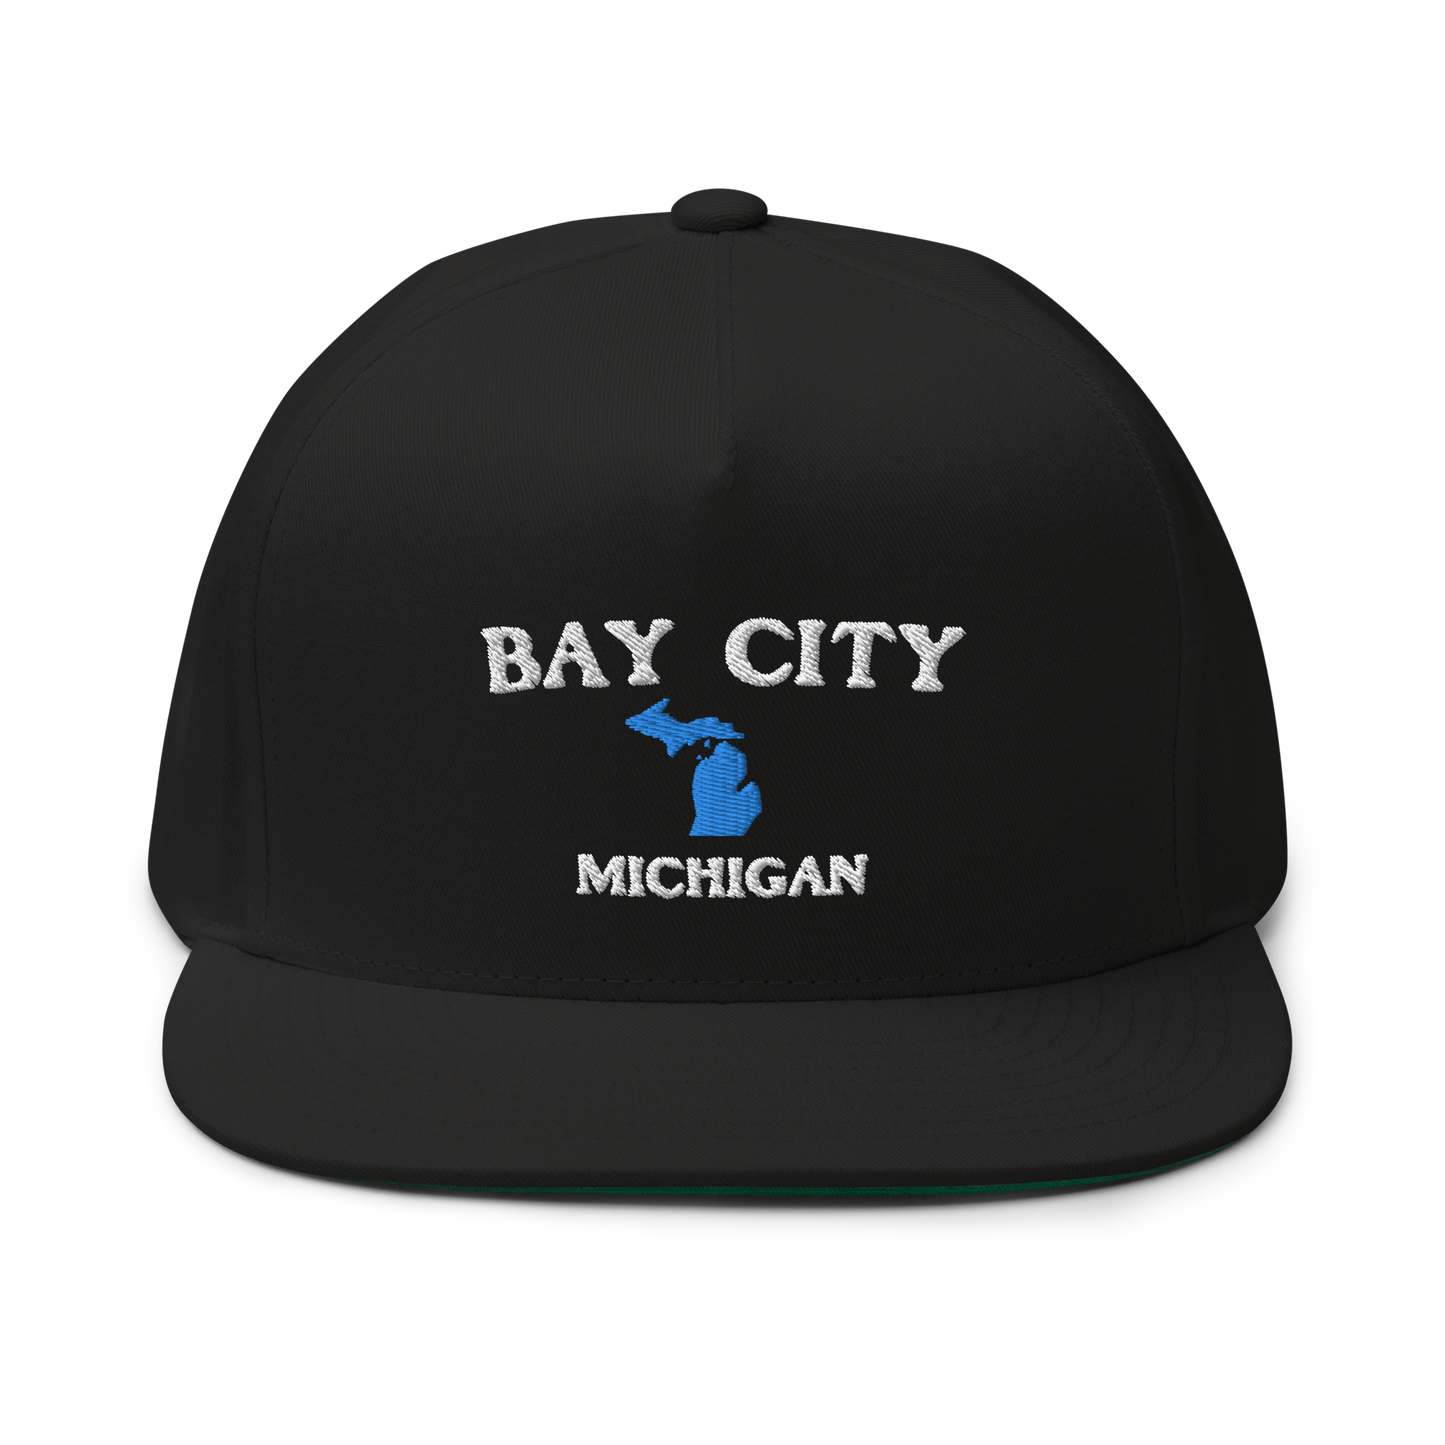 'Bay City Michigan' Flat Bill Snapback (w/ Michigan Outline)